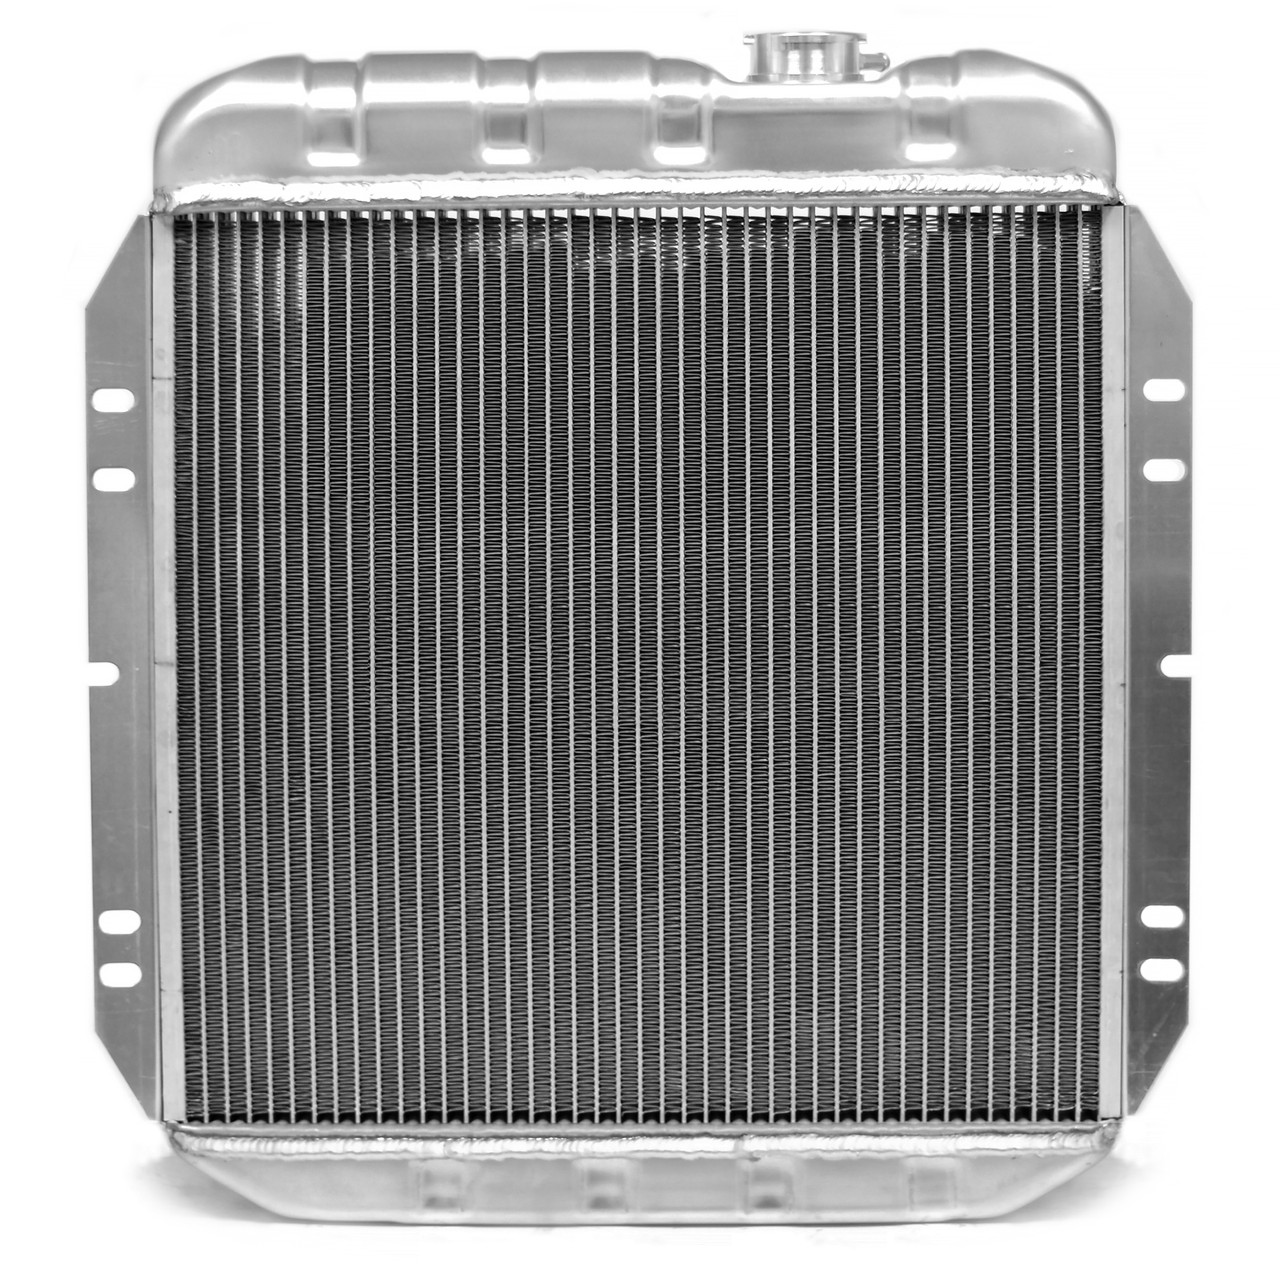 Maxcore 2-Row Performance Aluminum Radiator 17" 144/170/200 [FM-ER202]